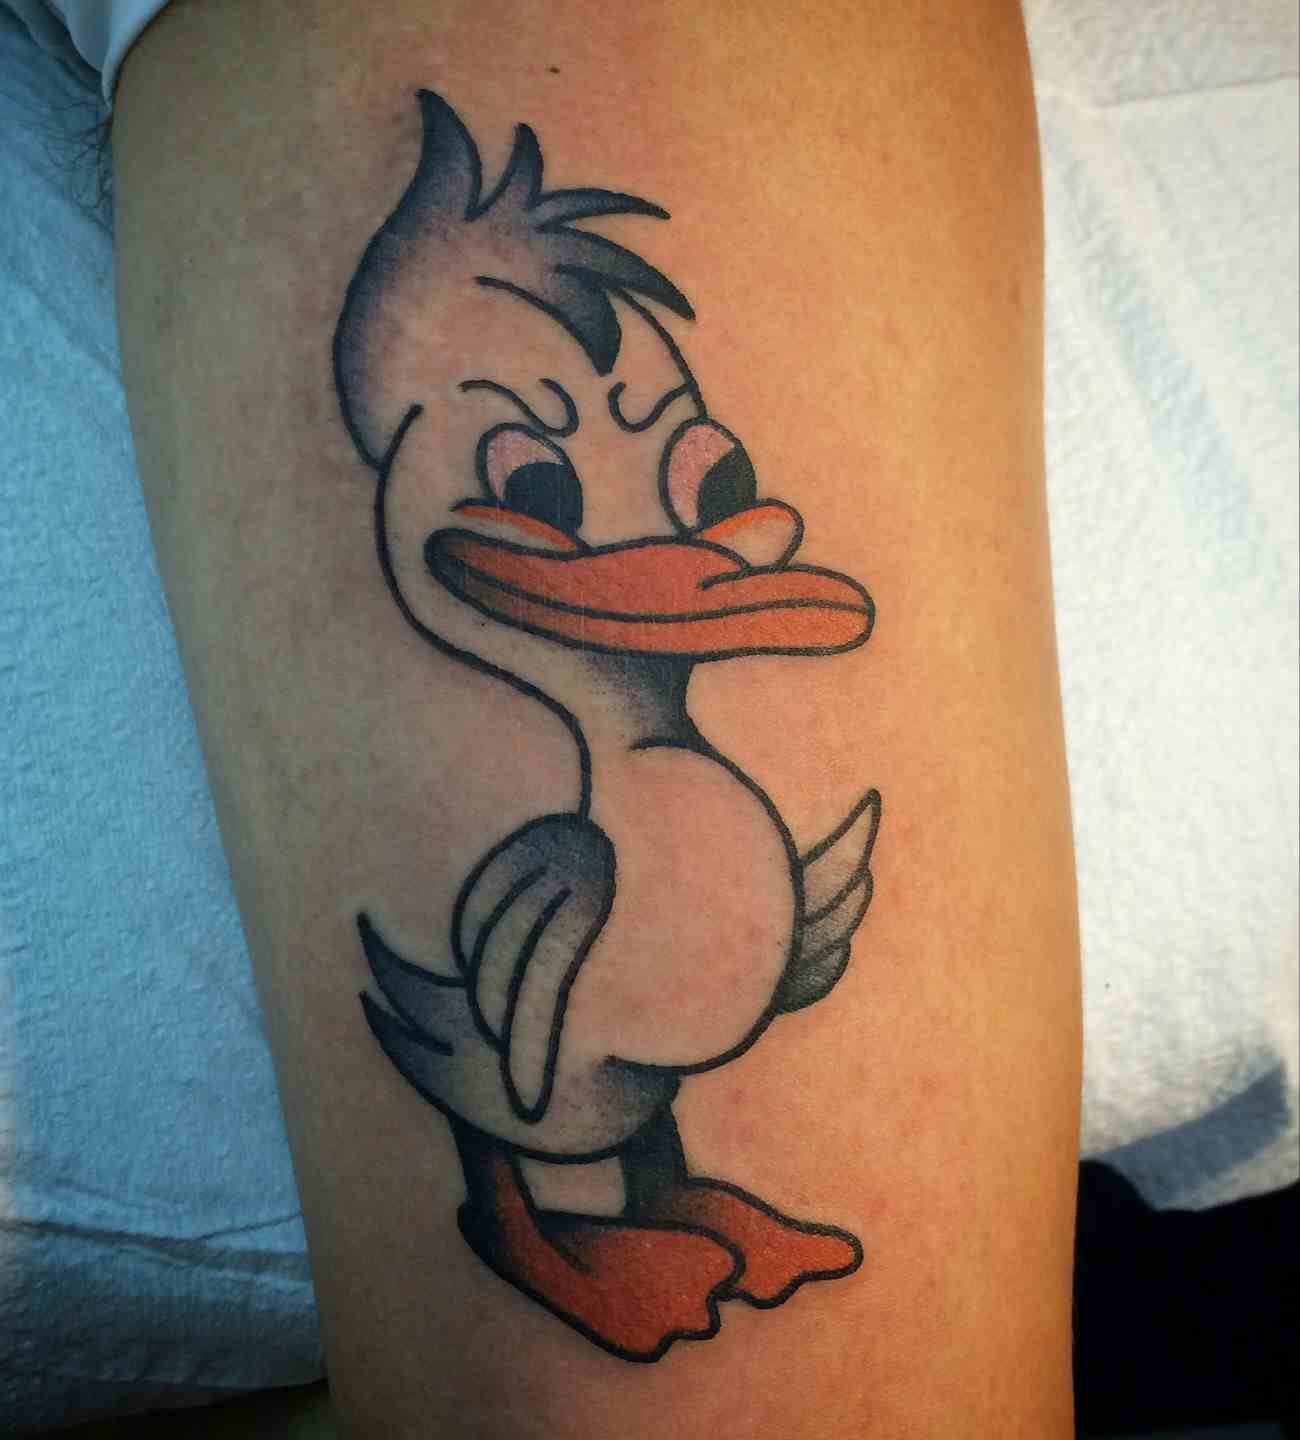 Who me duck tattoo